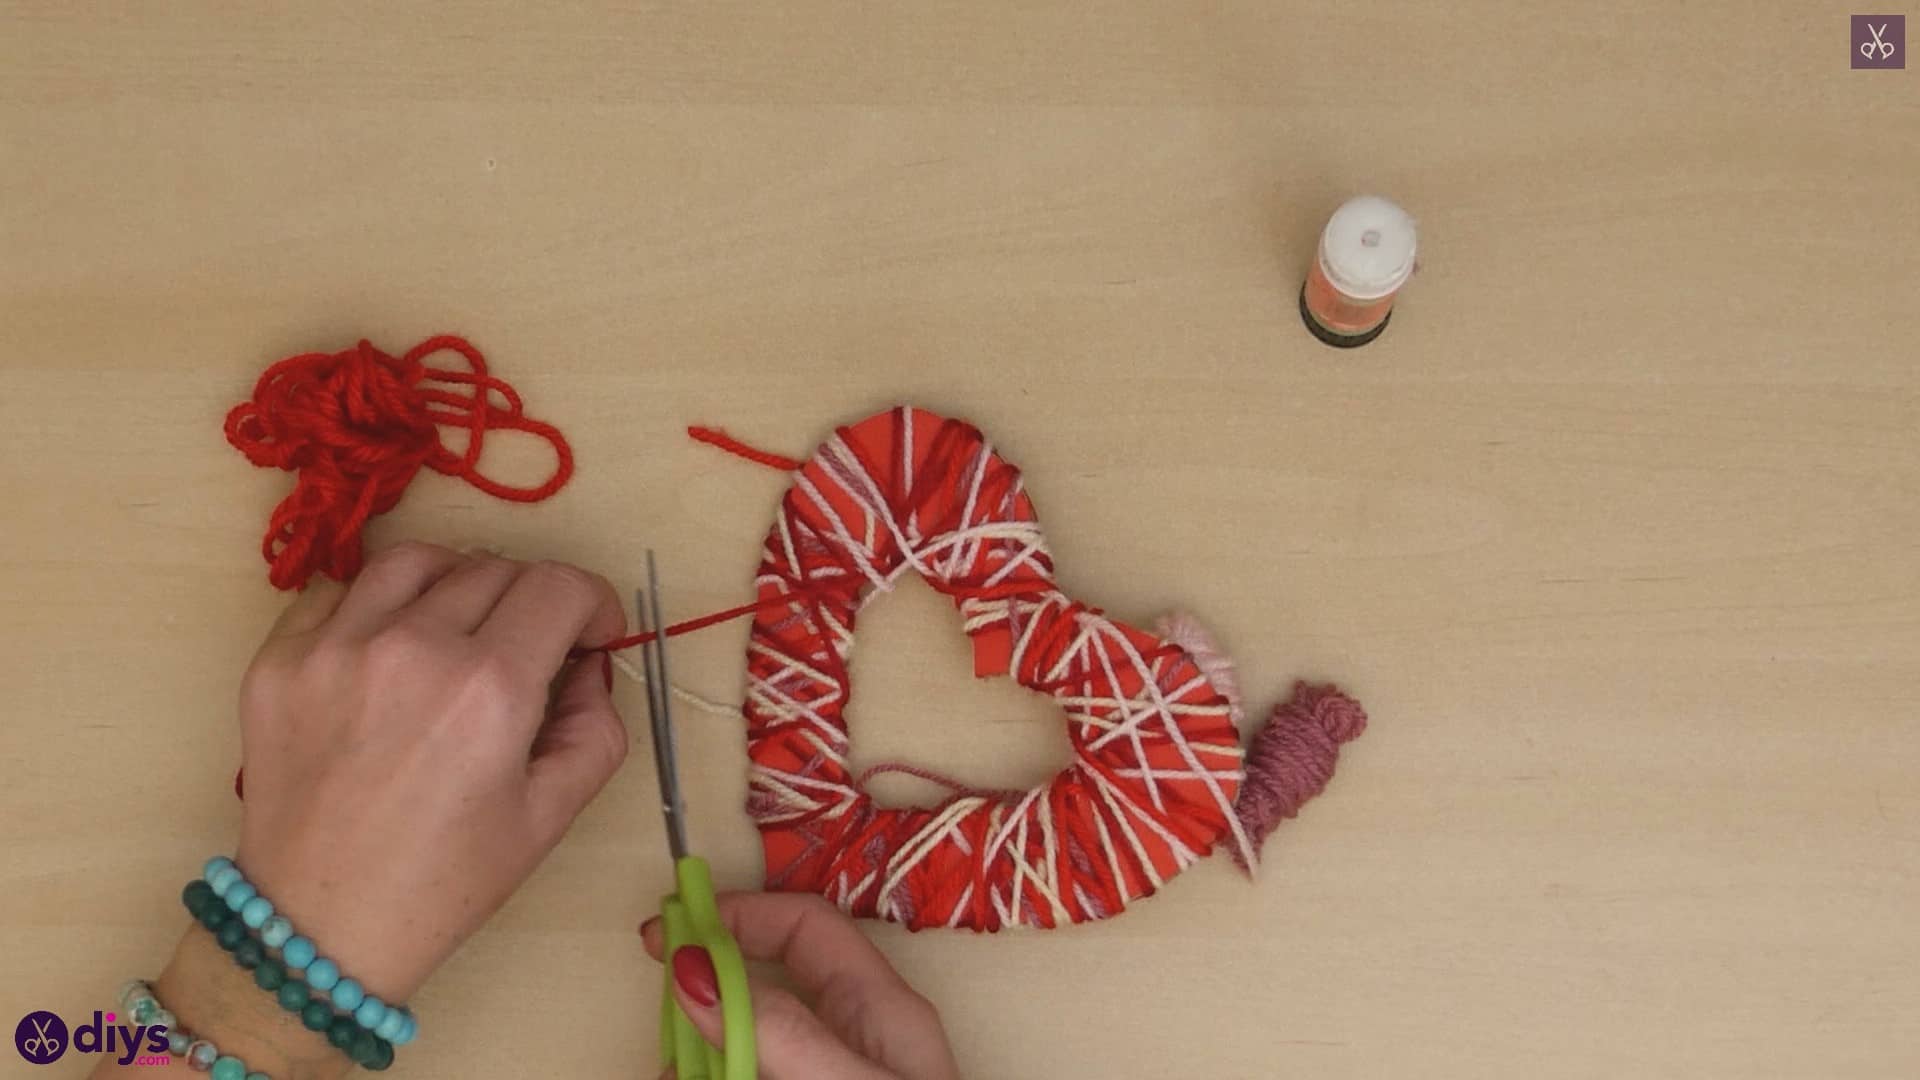 Diy yarn wrapped paper heart step 6b